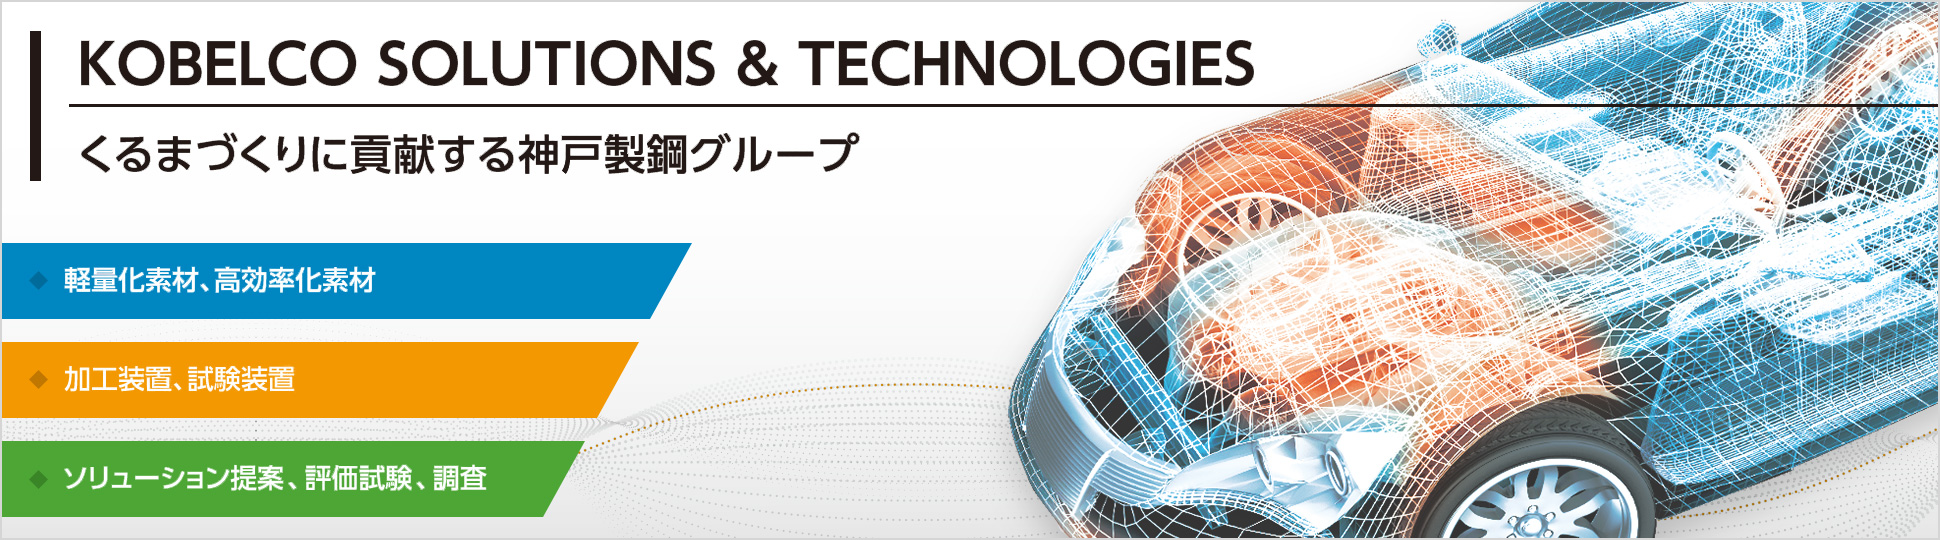 KOBELCO SOLUTIONS ＆ TECHNOLOGIES　くるまづくりに貢献する神戸製鋼グループ